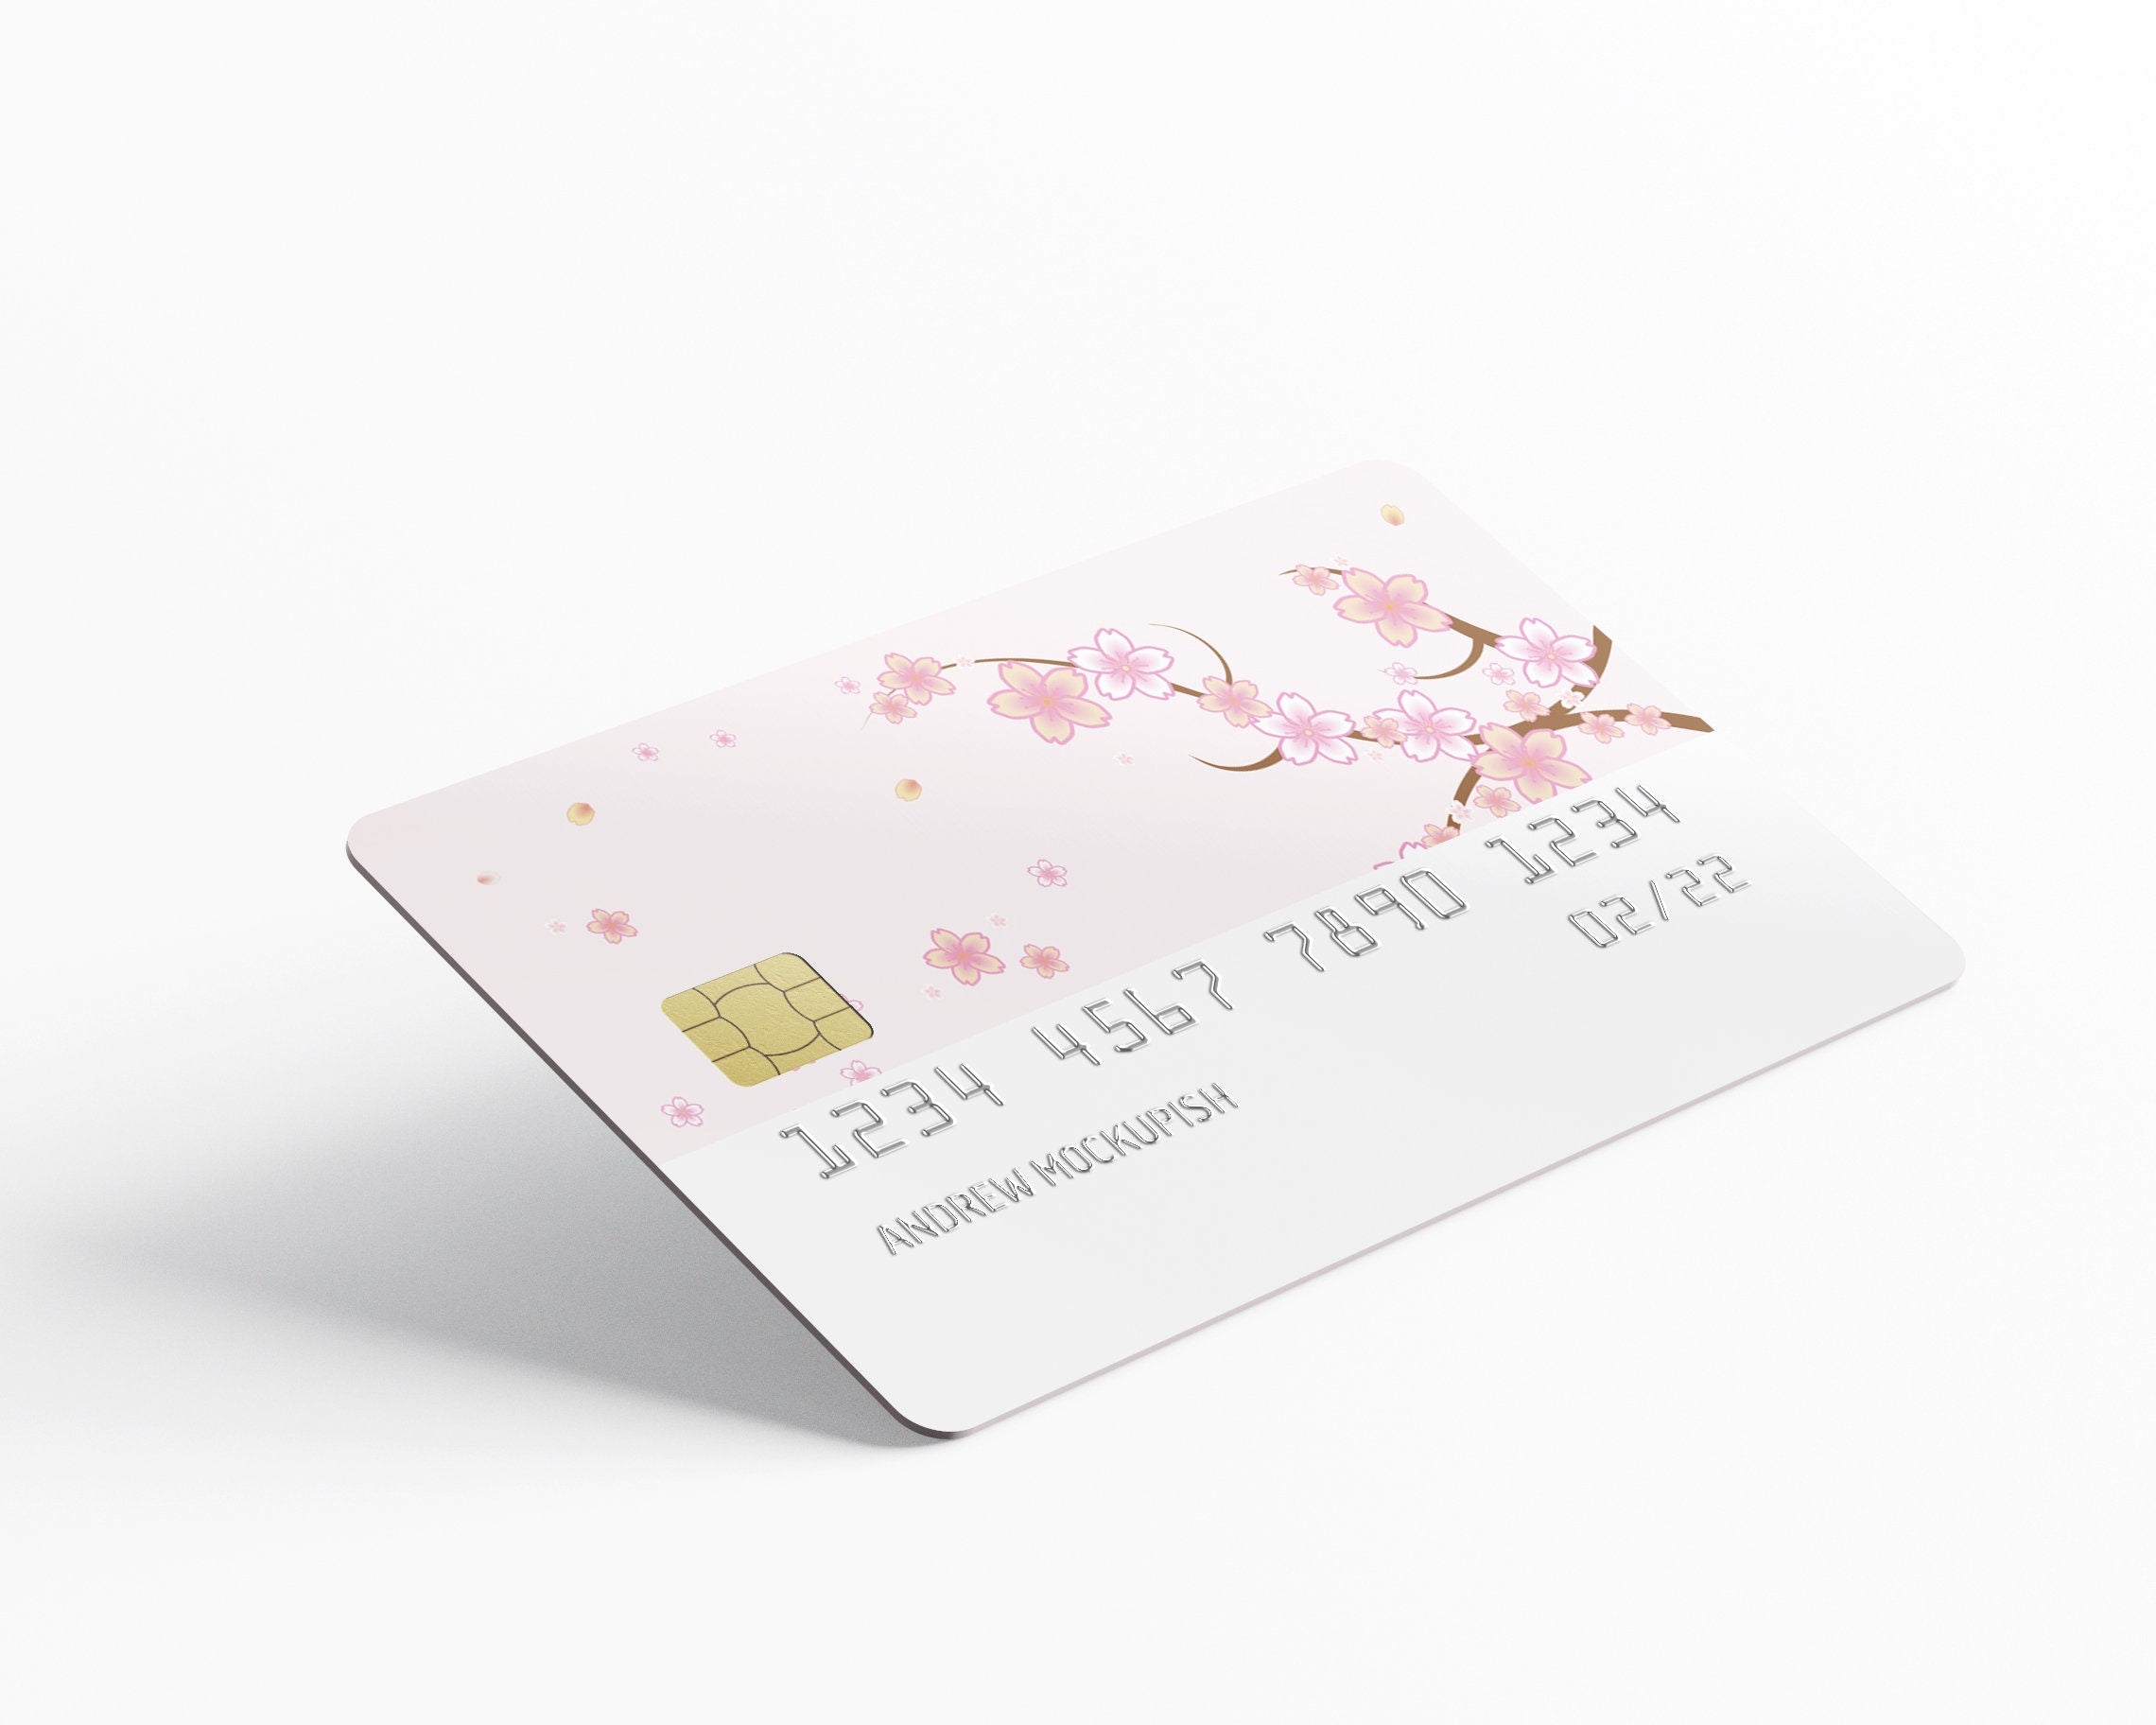 Tacky Design 4pcs Debit Card Skin for Credit Card Stickers and Debit Card Sticker, 3M Vinyl Waterproof, Bubble-Free Installation